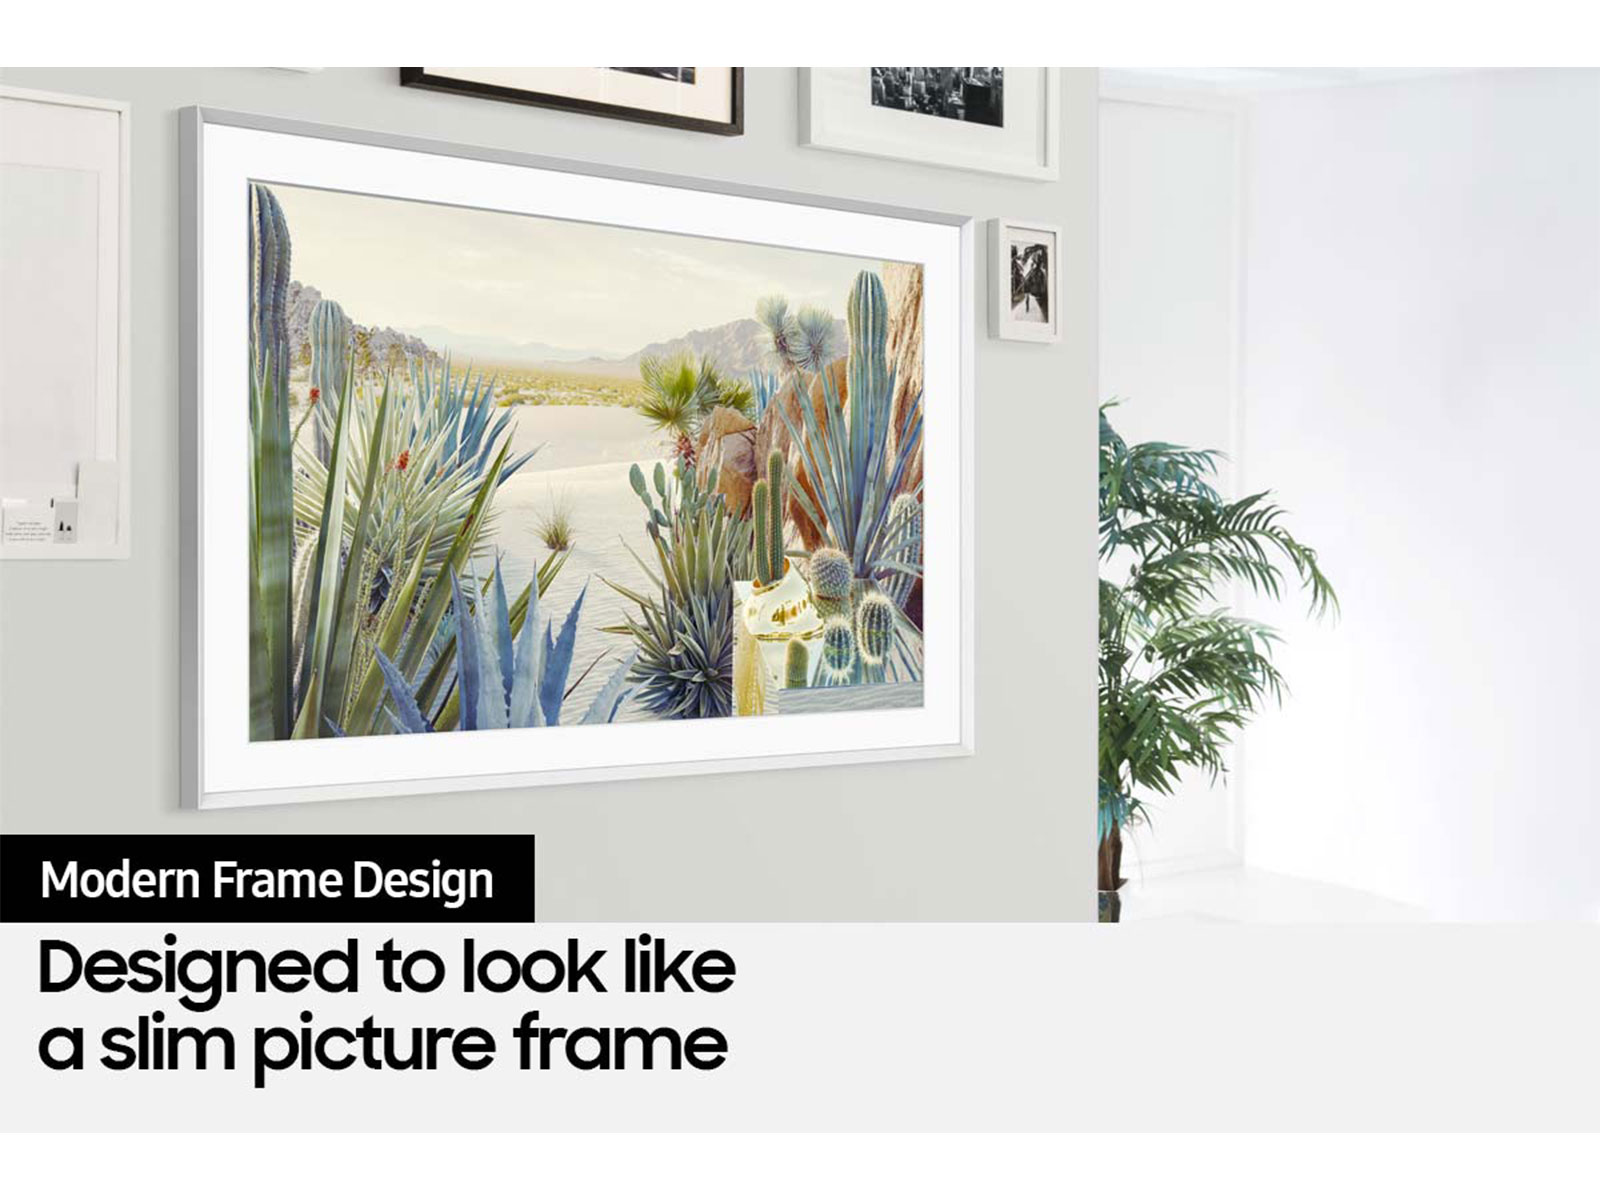 Meet The Frame TV, Samsung Picture Frame Art TV